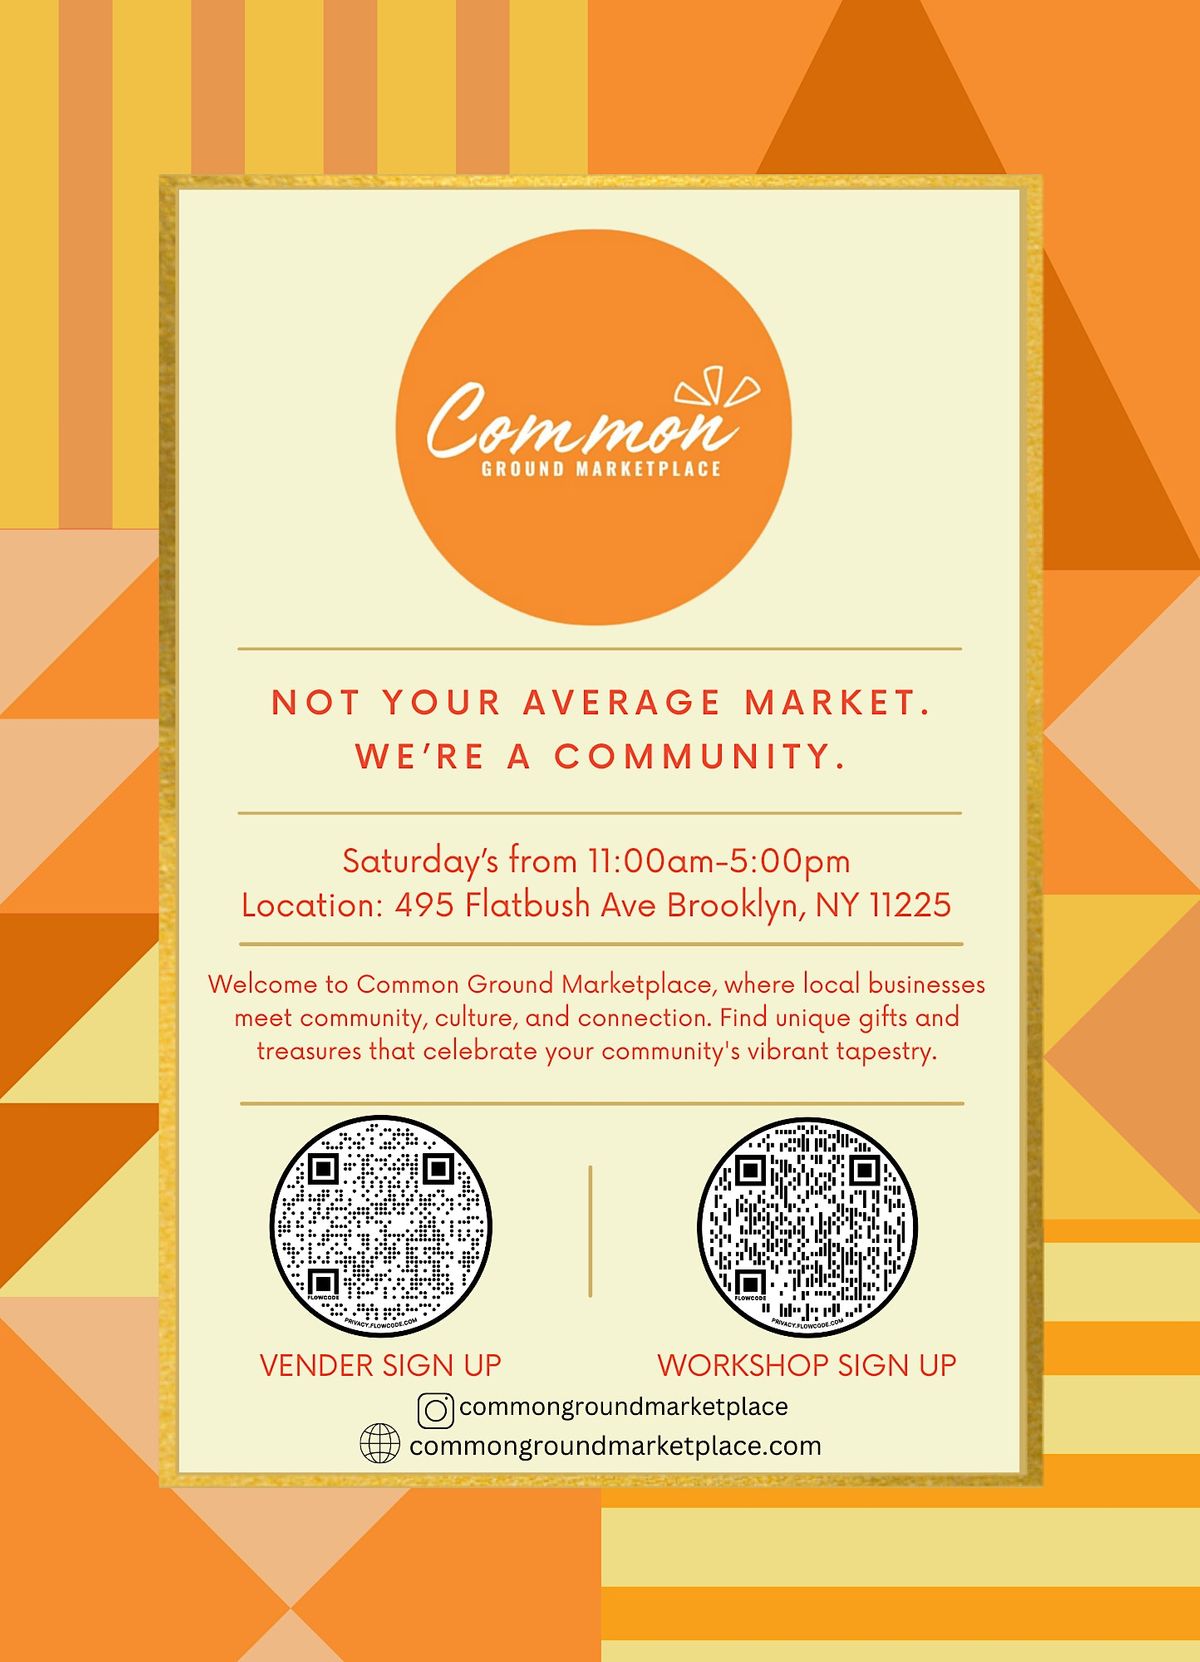 Common Ground Marketplace: Pop-up Market